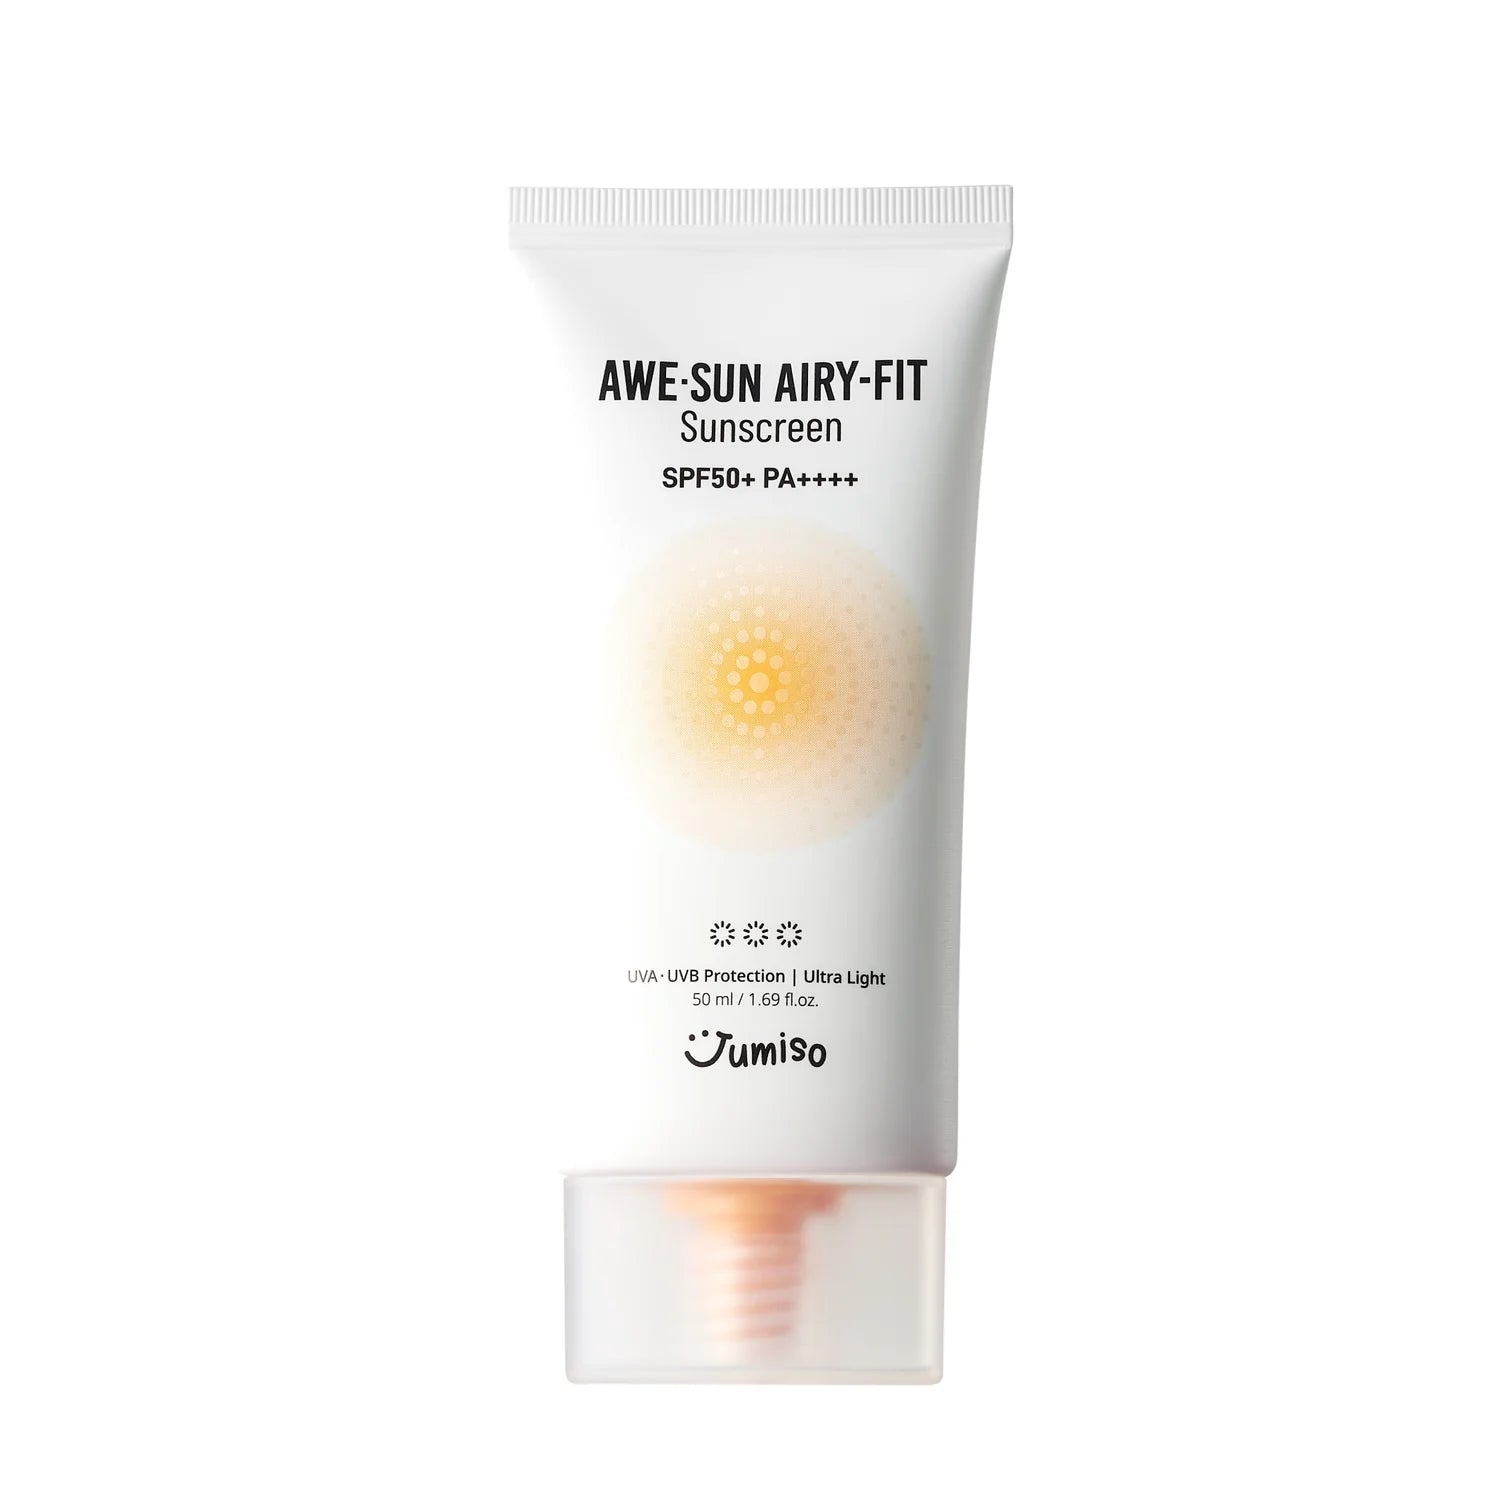  Jumiso Awe sun Airy Fit Sunscreen SPF 50ml